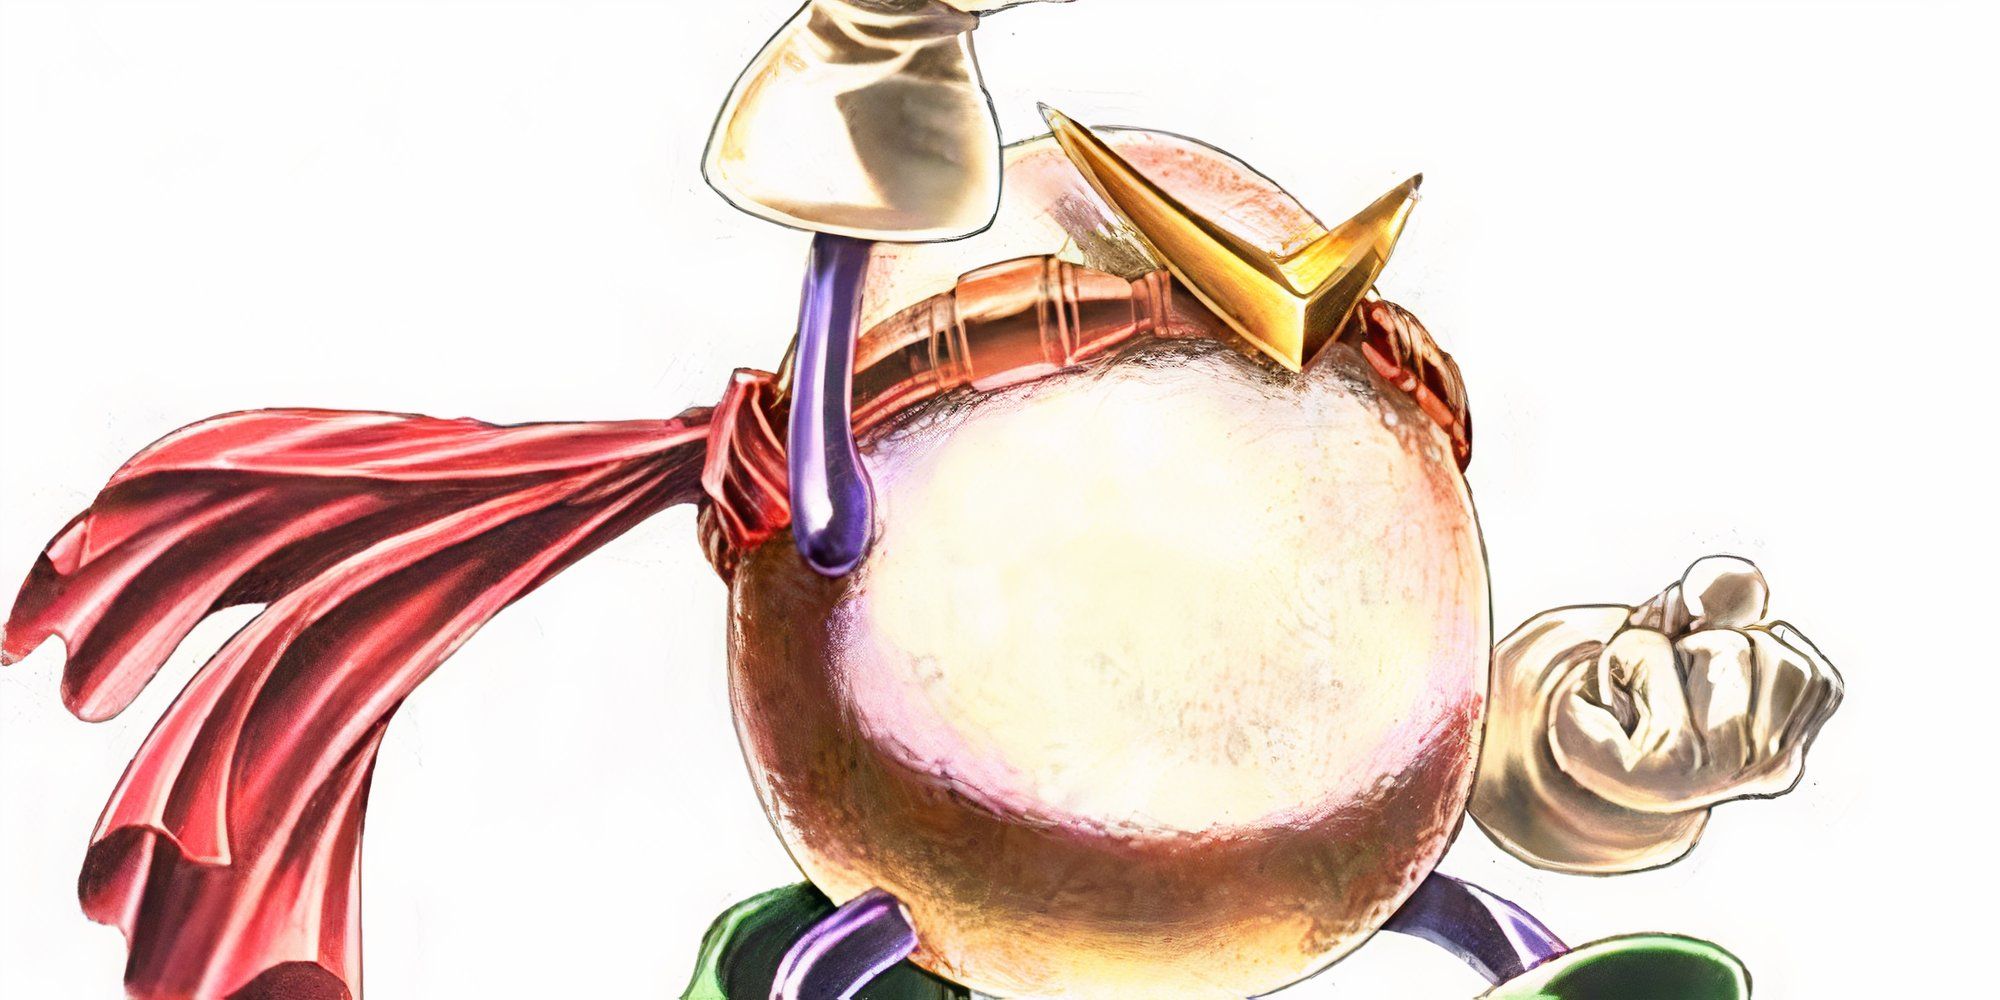 Eggman artwork for final fantasy 5 useless summon